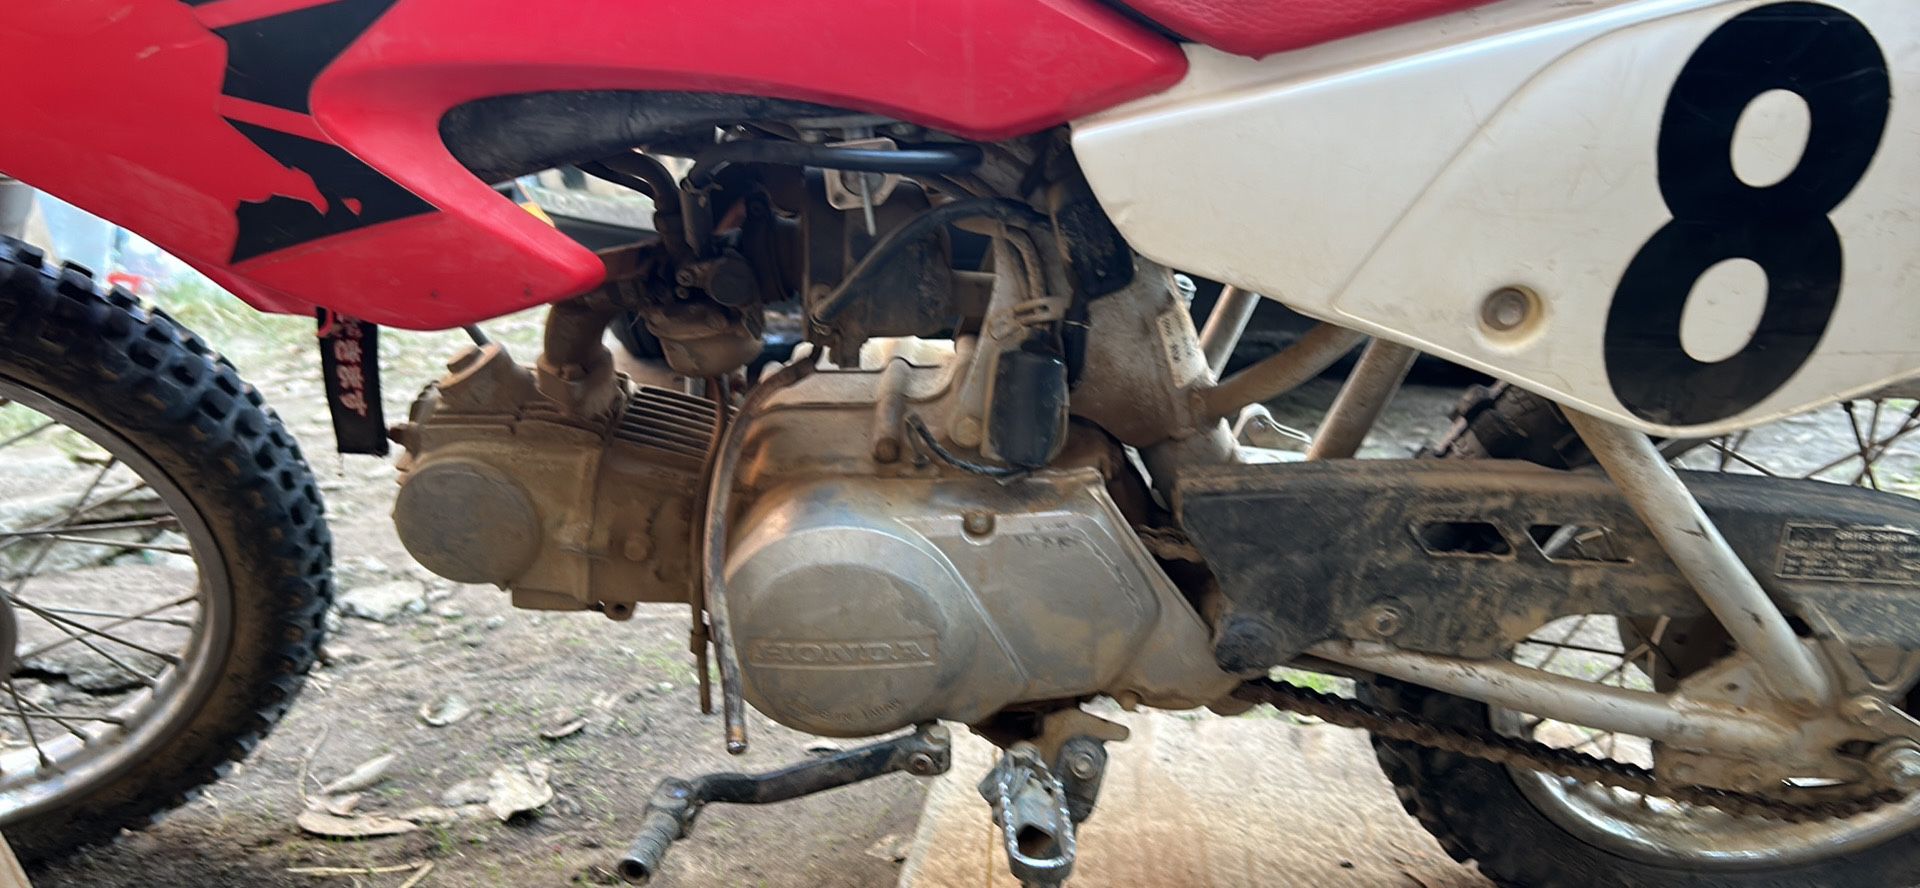 Honda Crf70 Dirt Bike